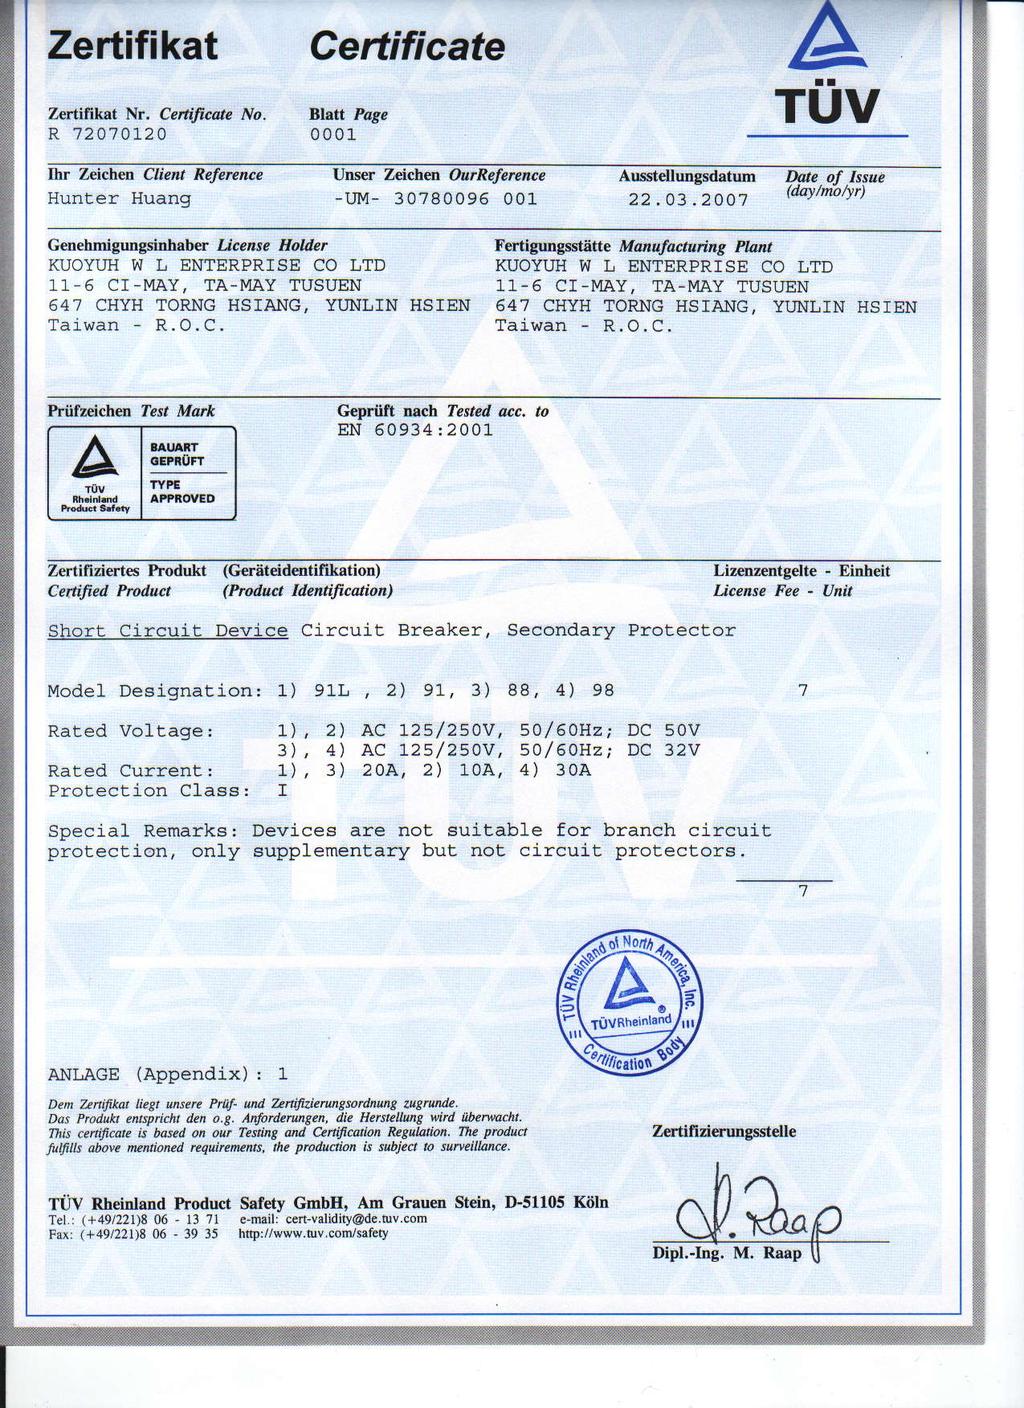 Zertifikat Certificate A Zertifikat Nr. Ceftifrcote No. R '7',7 AA Blatt Page 00